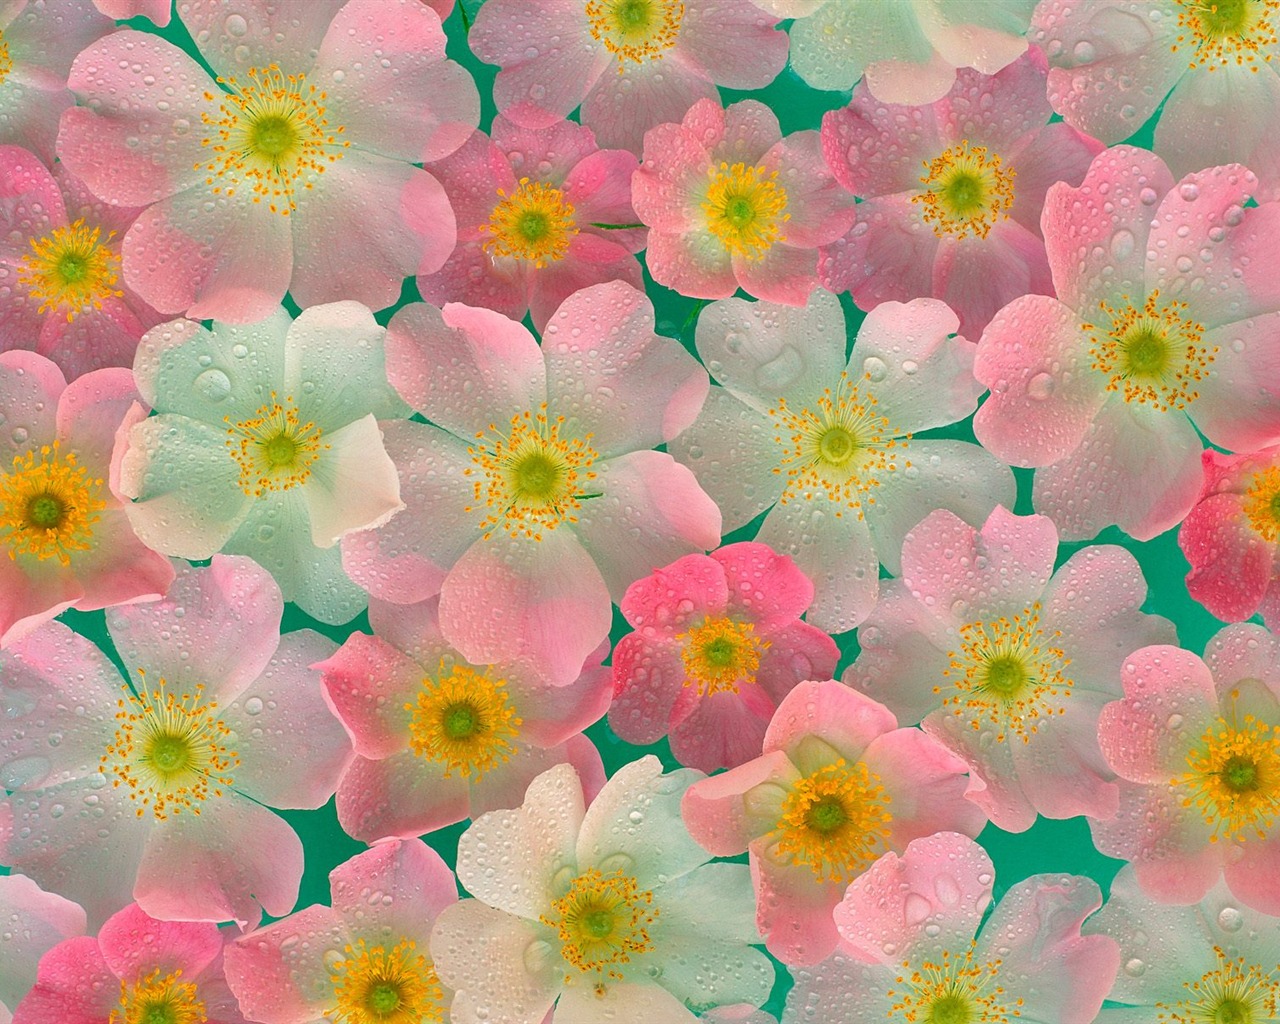 Flowers close-up (19) #9 - 1280x1024